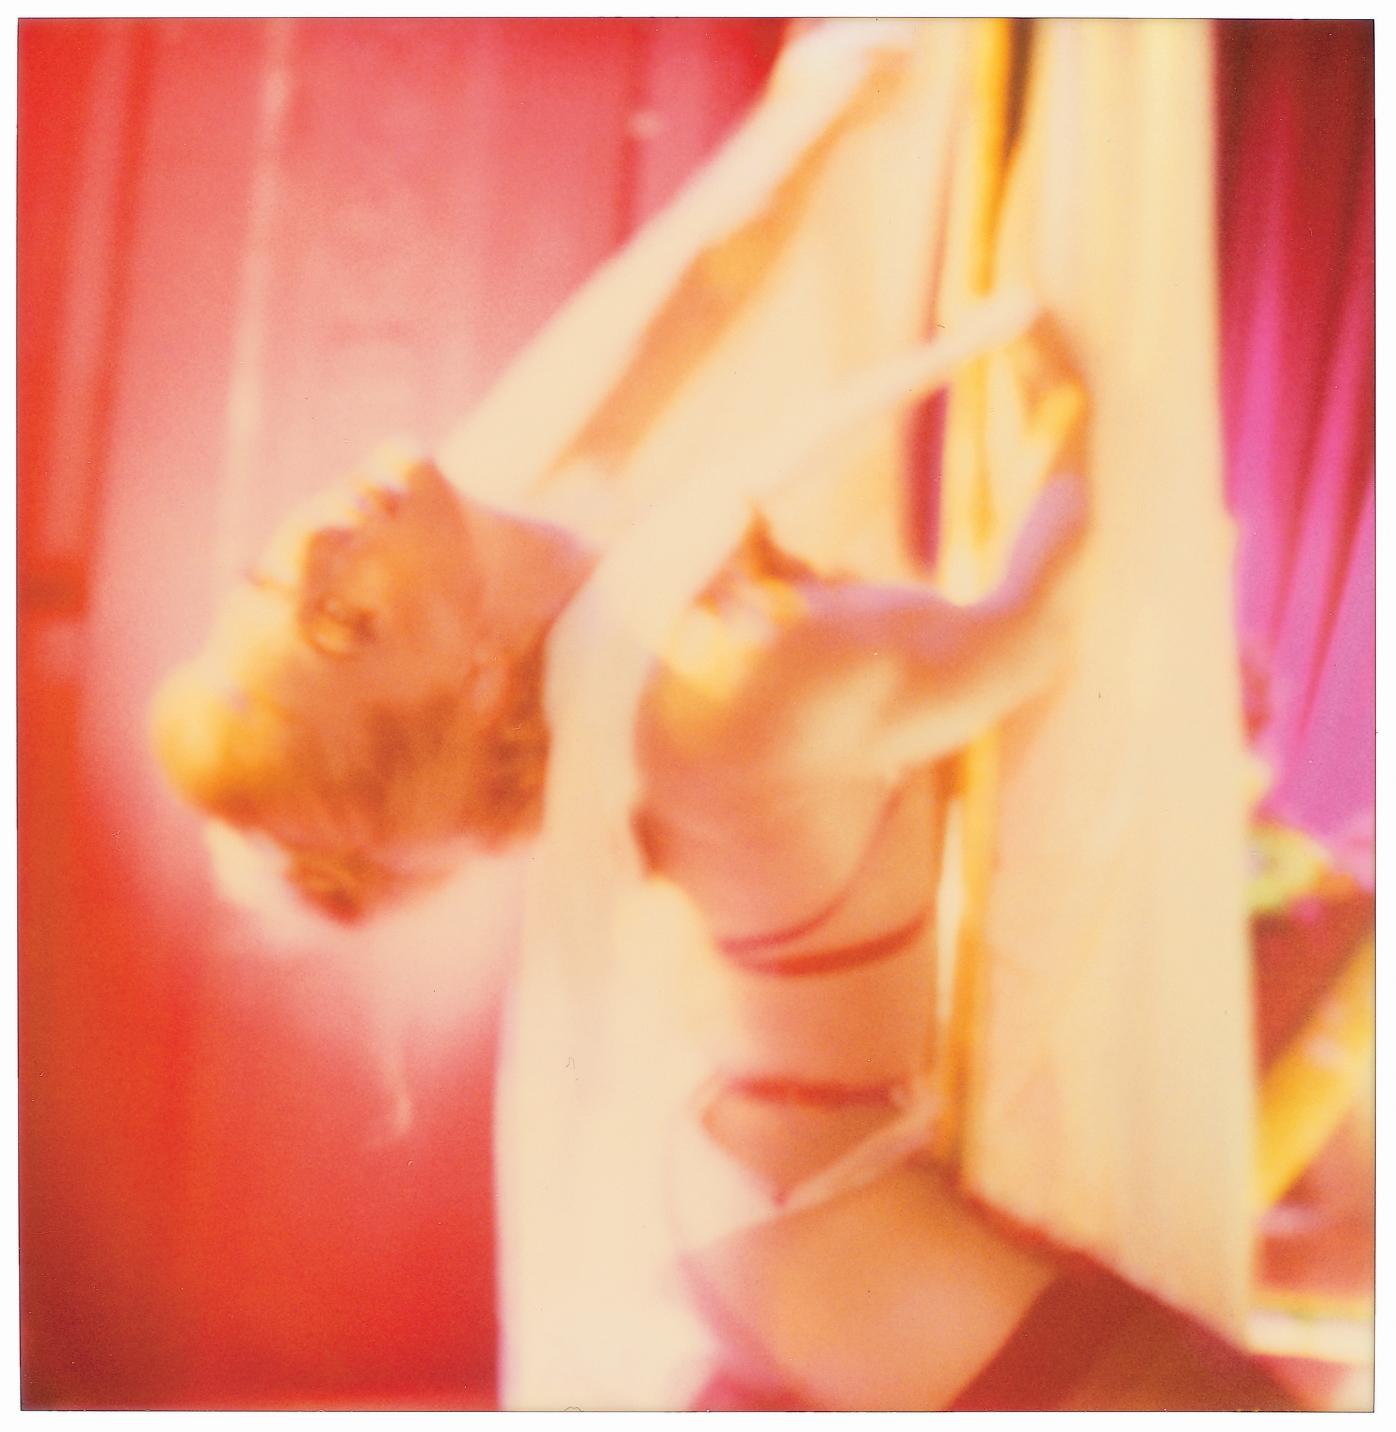 Dancer (Stay) - 8 pieces, smaller size, analog, Polaroid, Contemporary,  - Beige Figurative Photograph by Stefanie Schneider